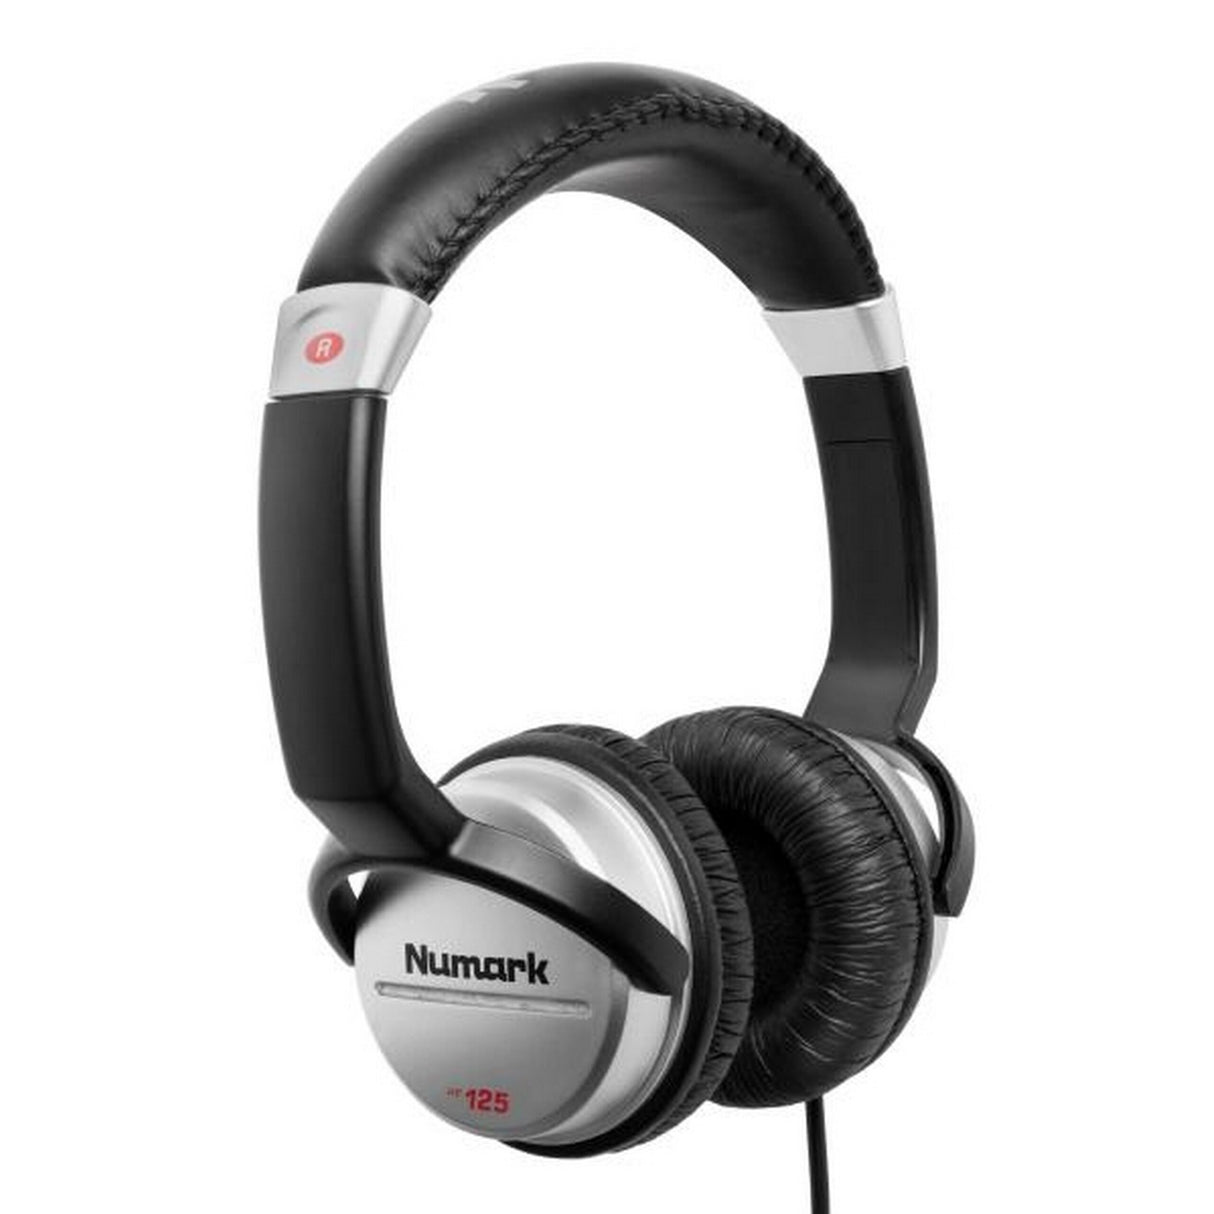 Numark HF125 Professional DJ Headphone